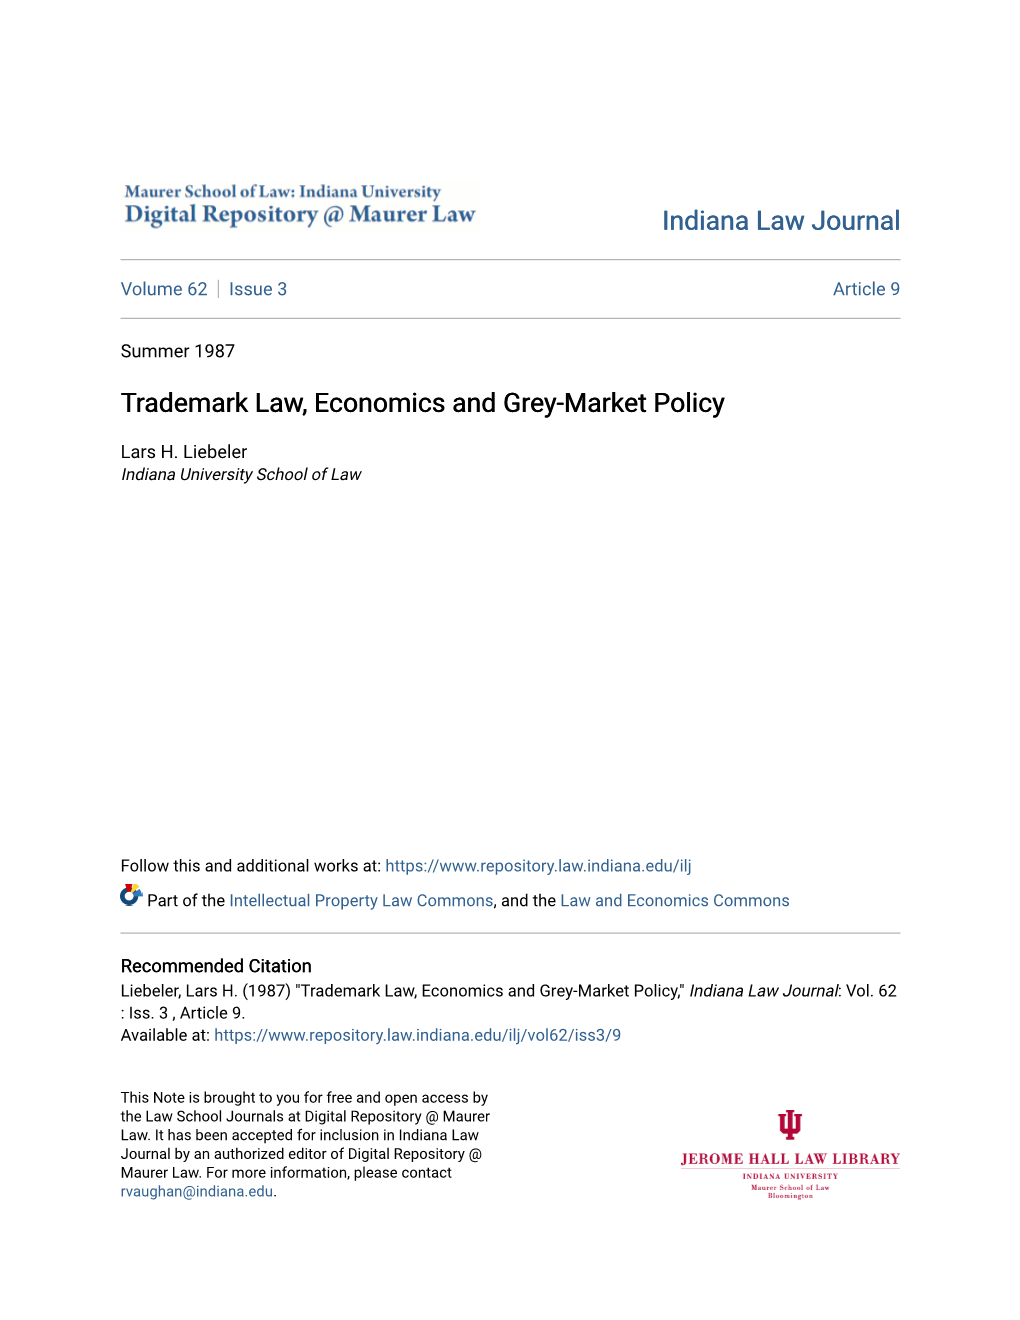 Trademark Law, Economics and Grey-Market Policy